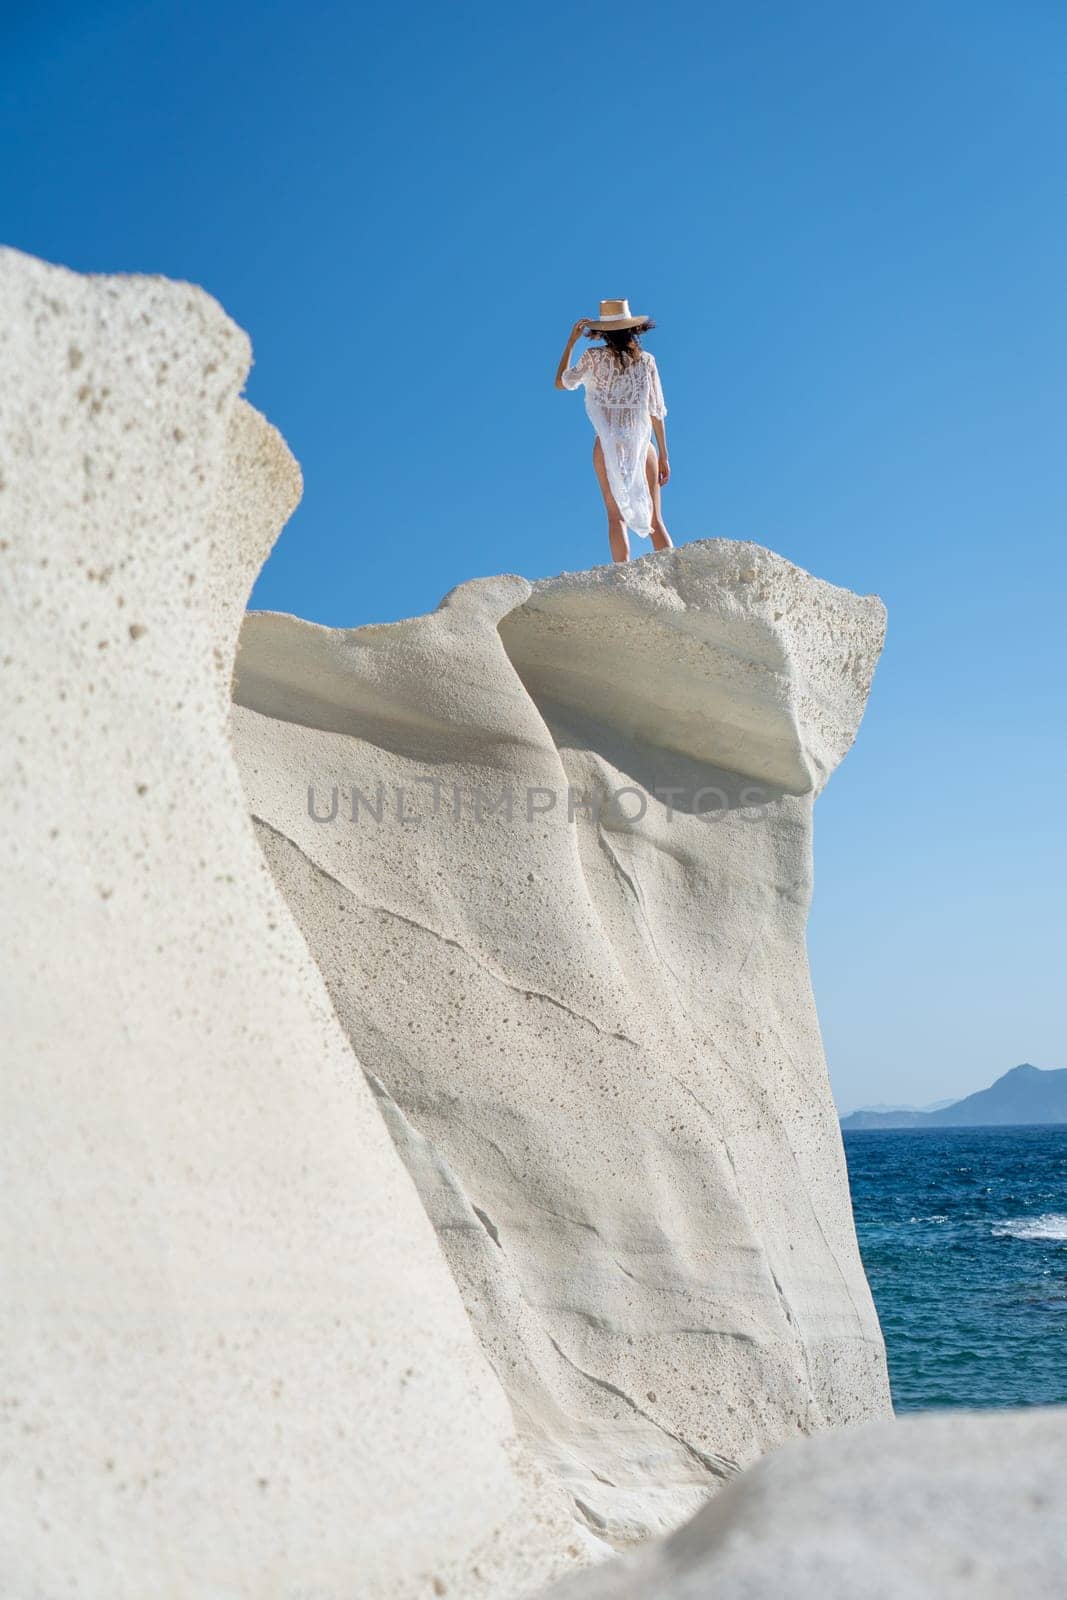 Model on top of a cliff in Sarakiniko, Milos Island by LopezPastor